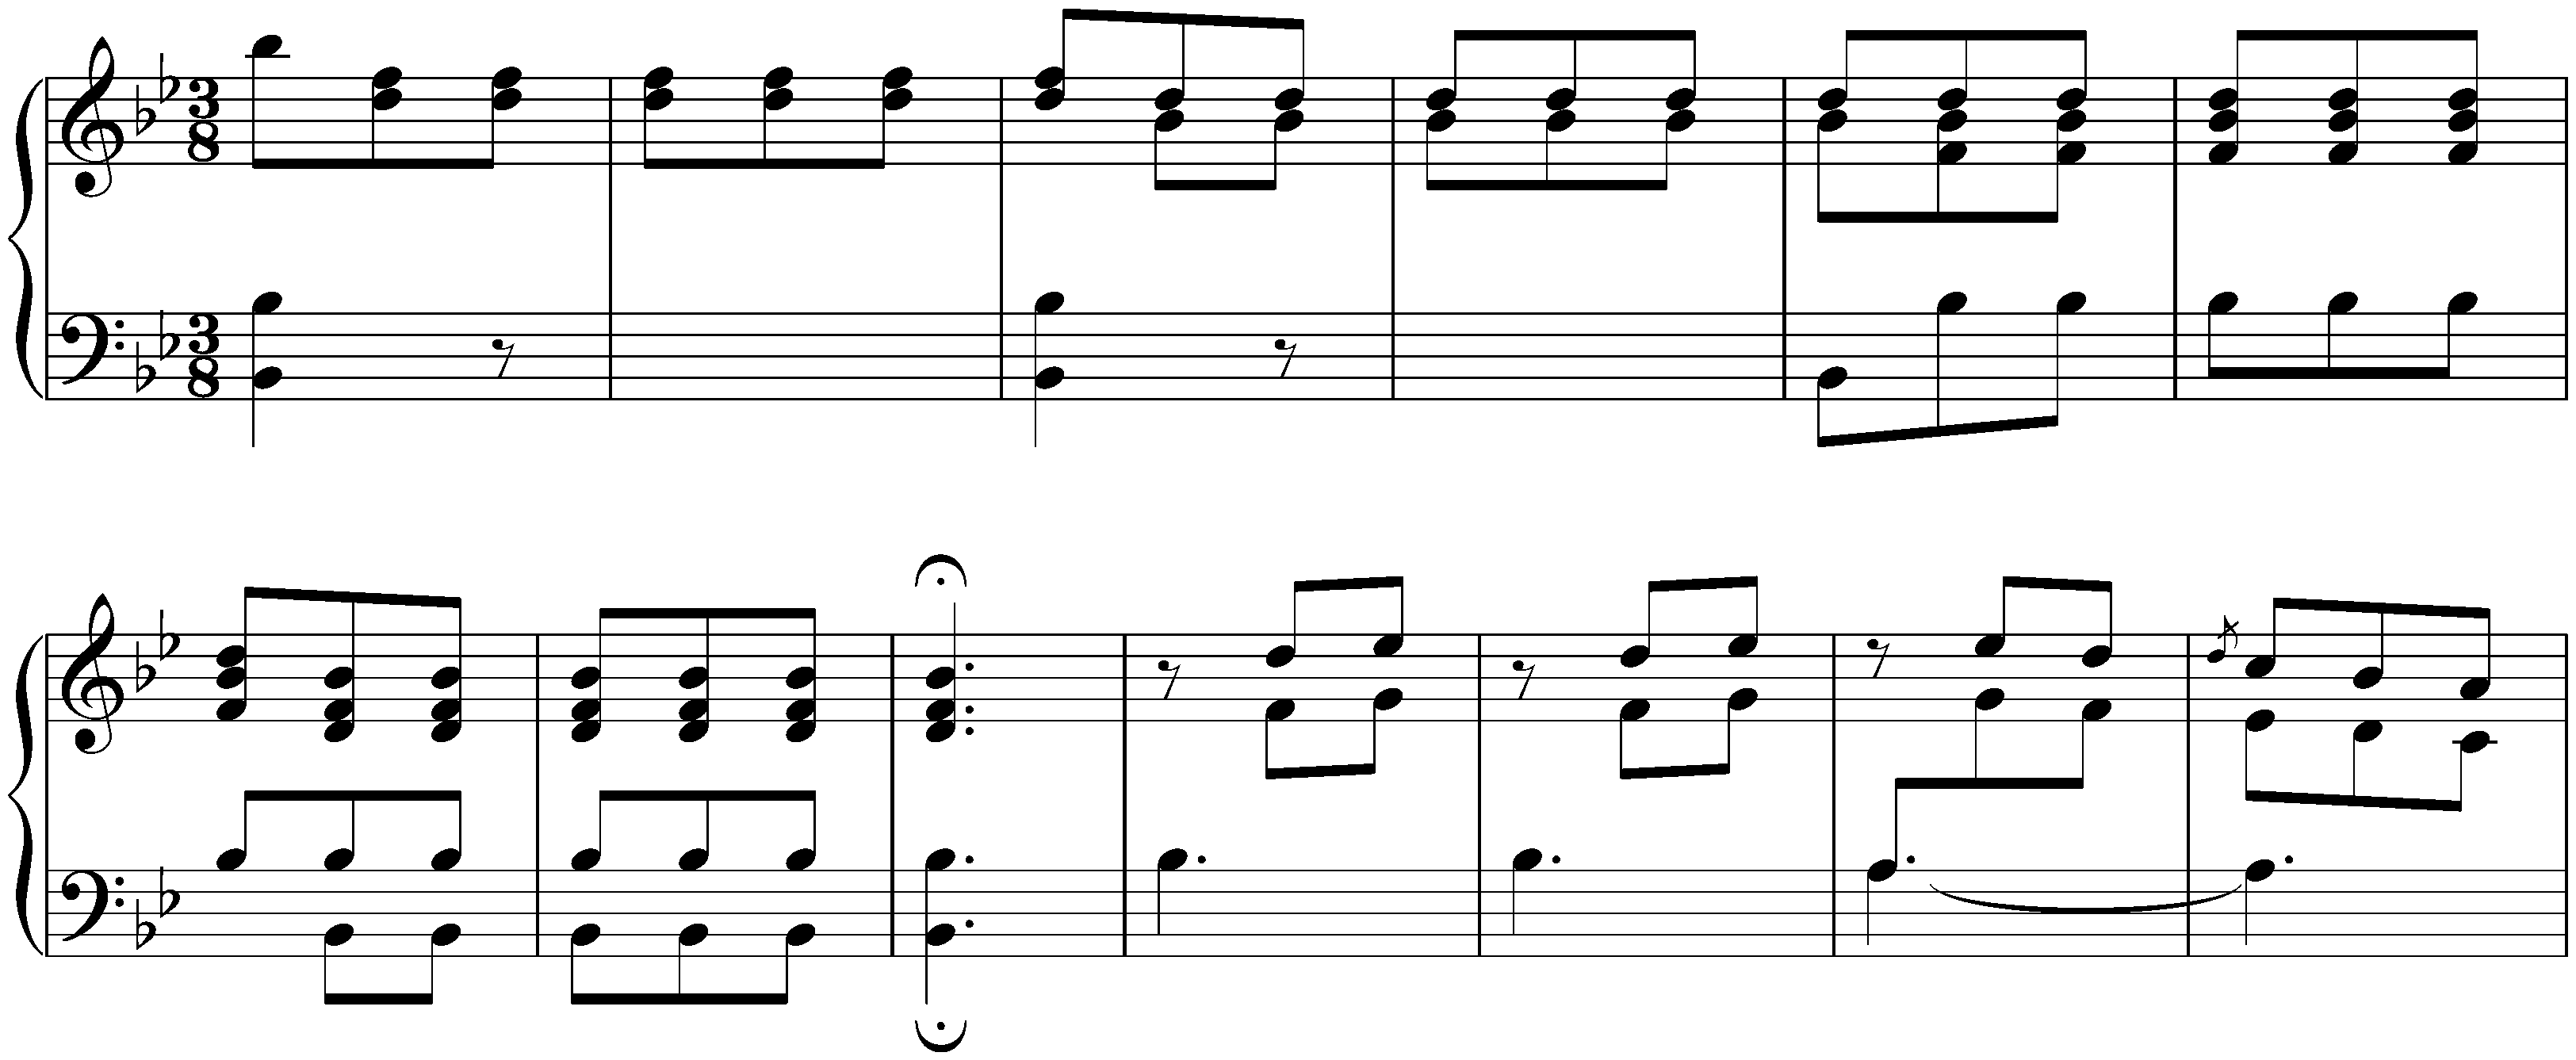 Sonatas found in Zaragoza; 1. B-flat major